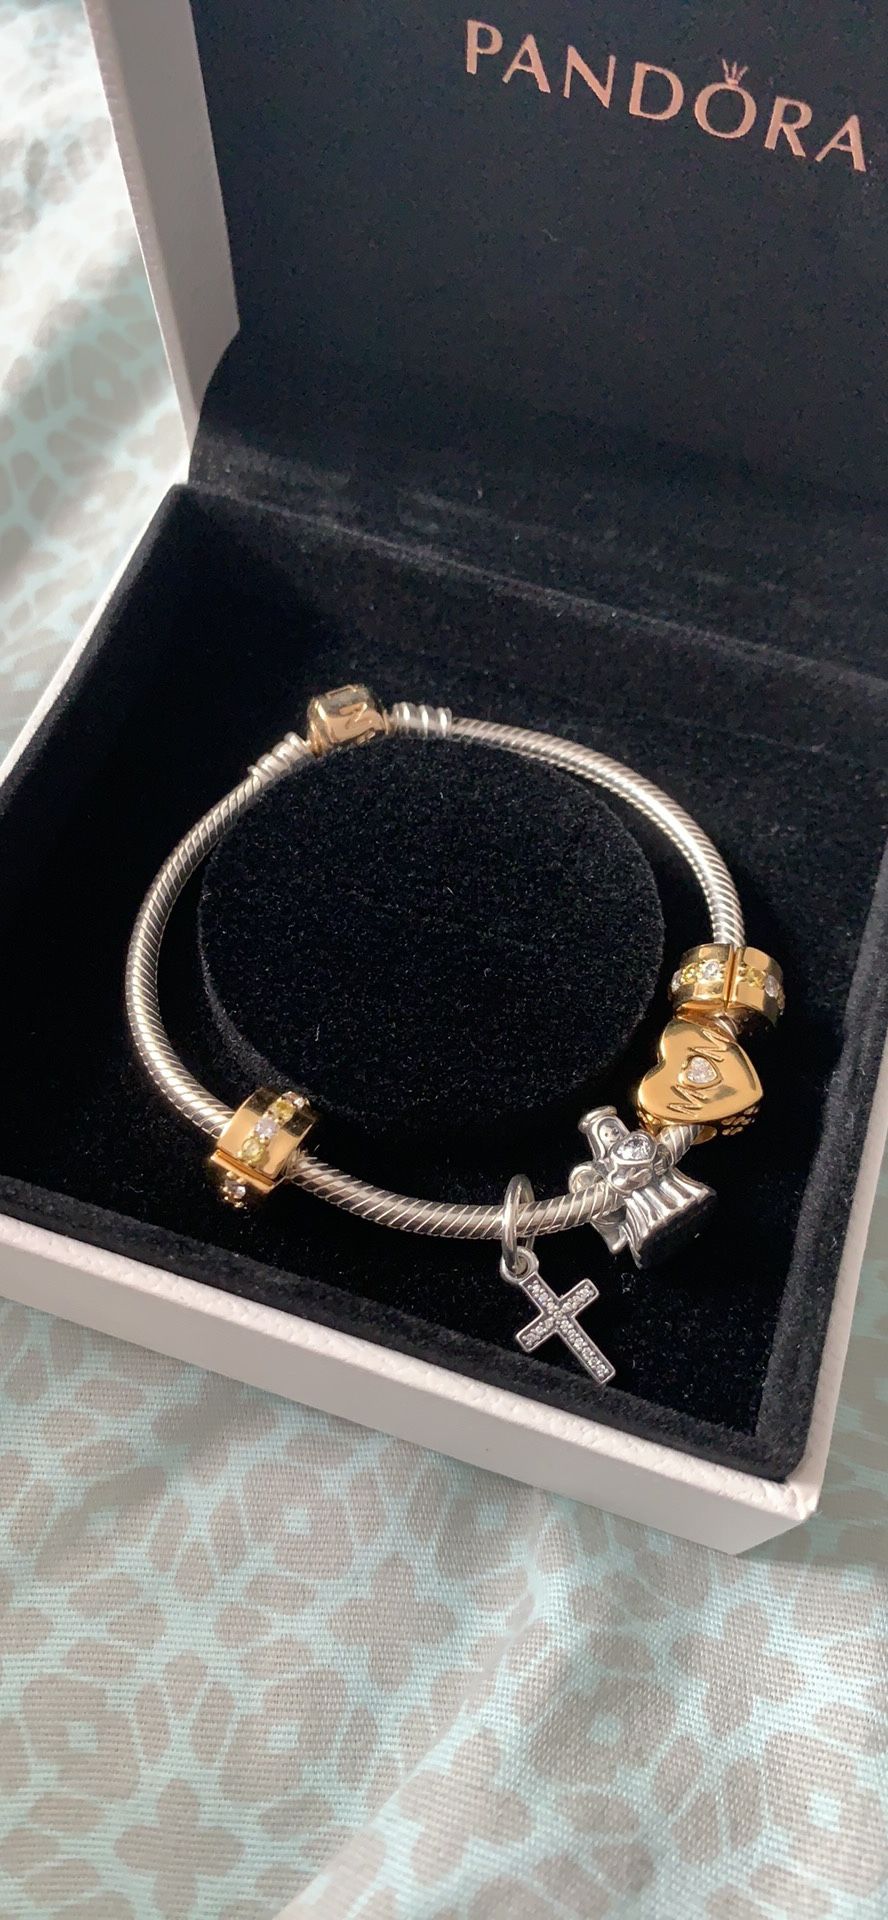 Pandora two toned bracelet 14 k gold/ w charms